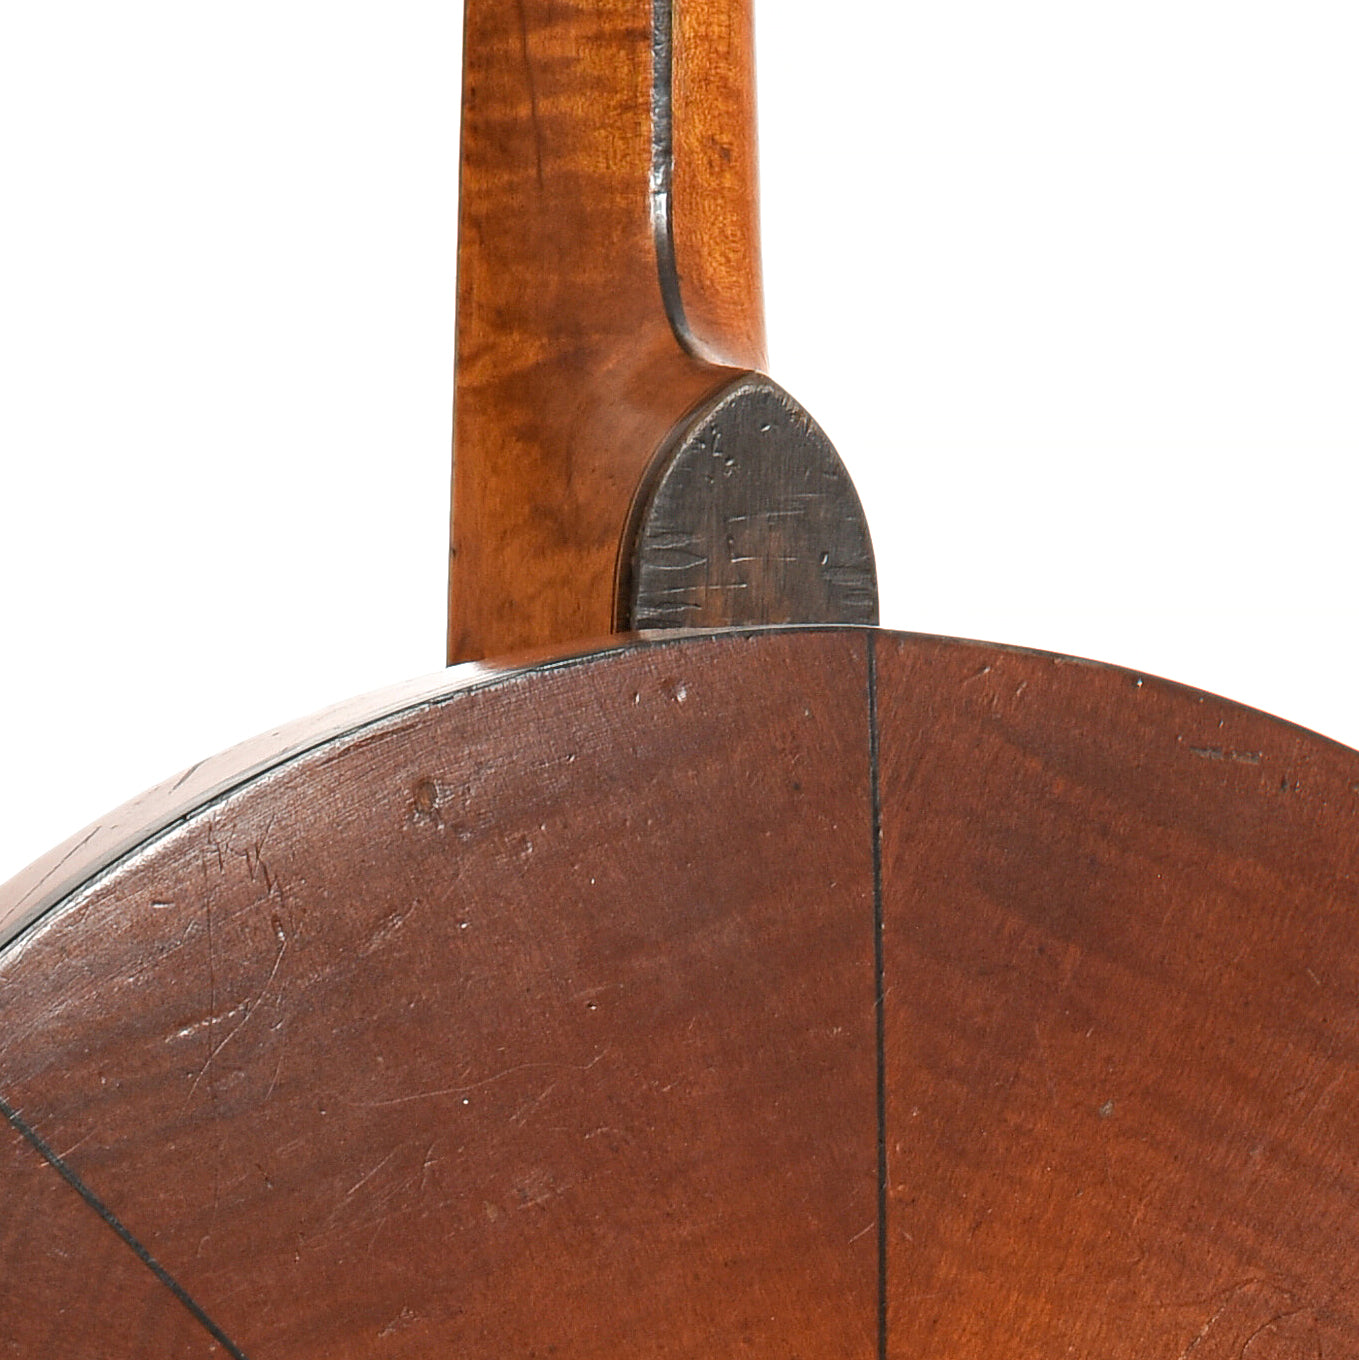 Heel of Vega Style M Tubaphone Tenor banjo